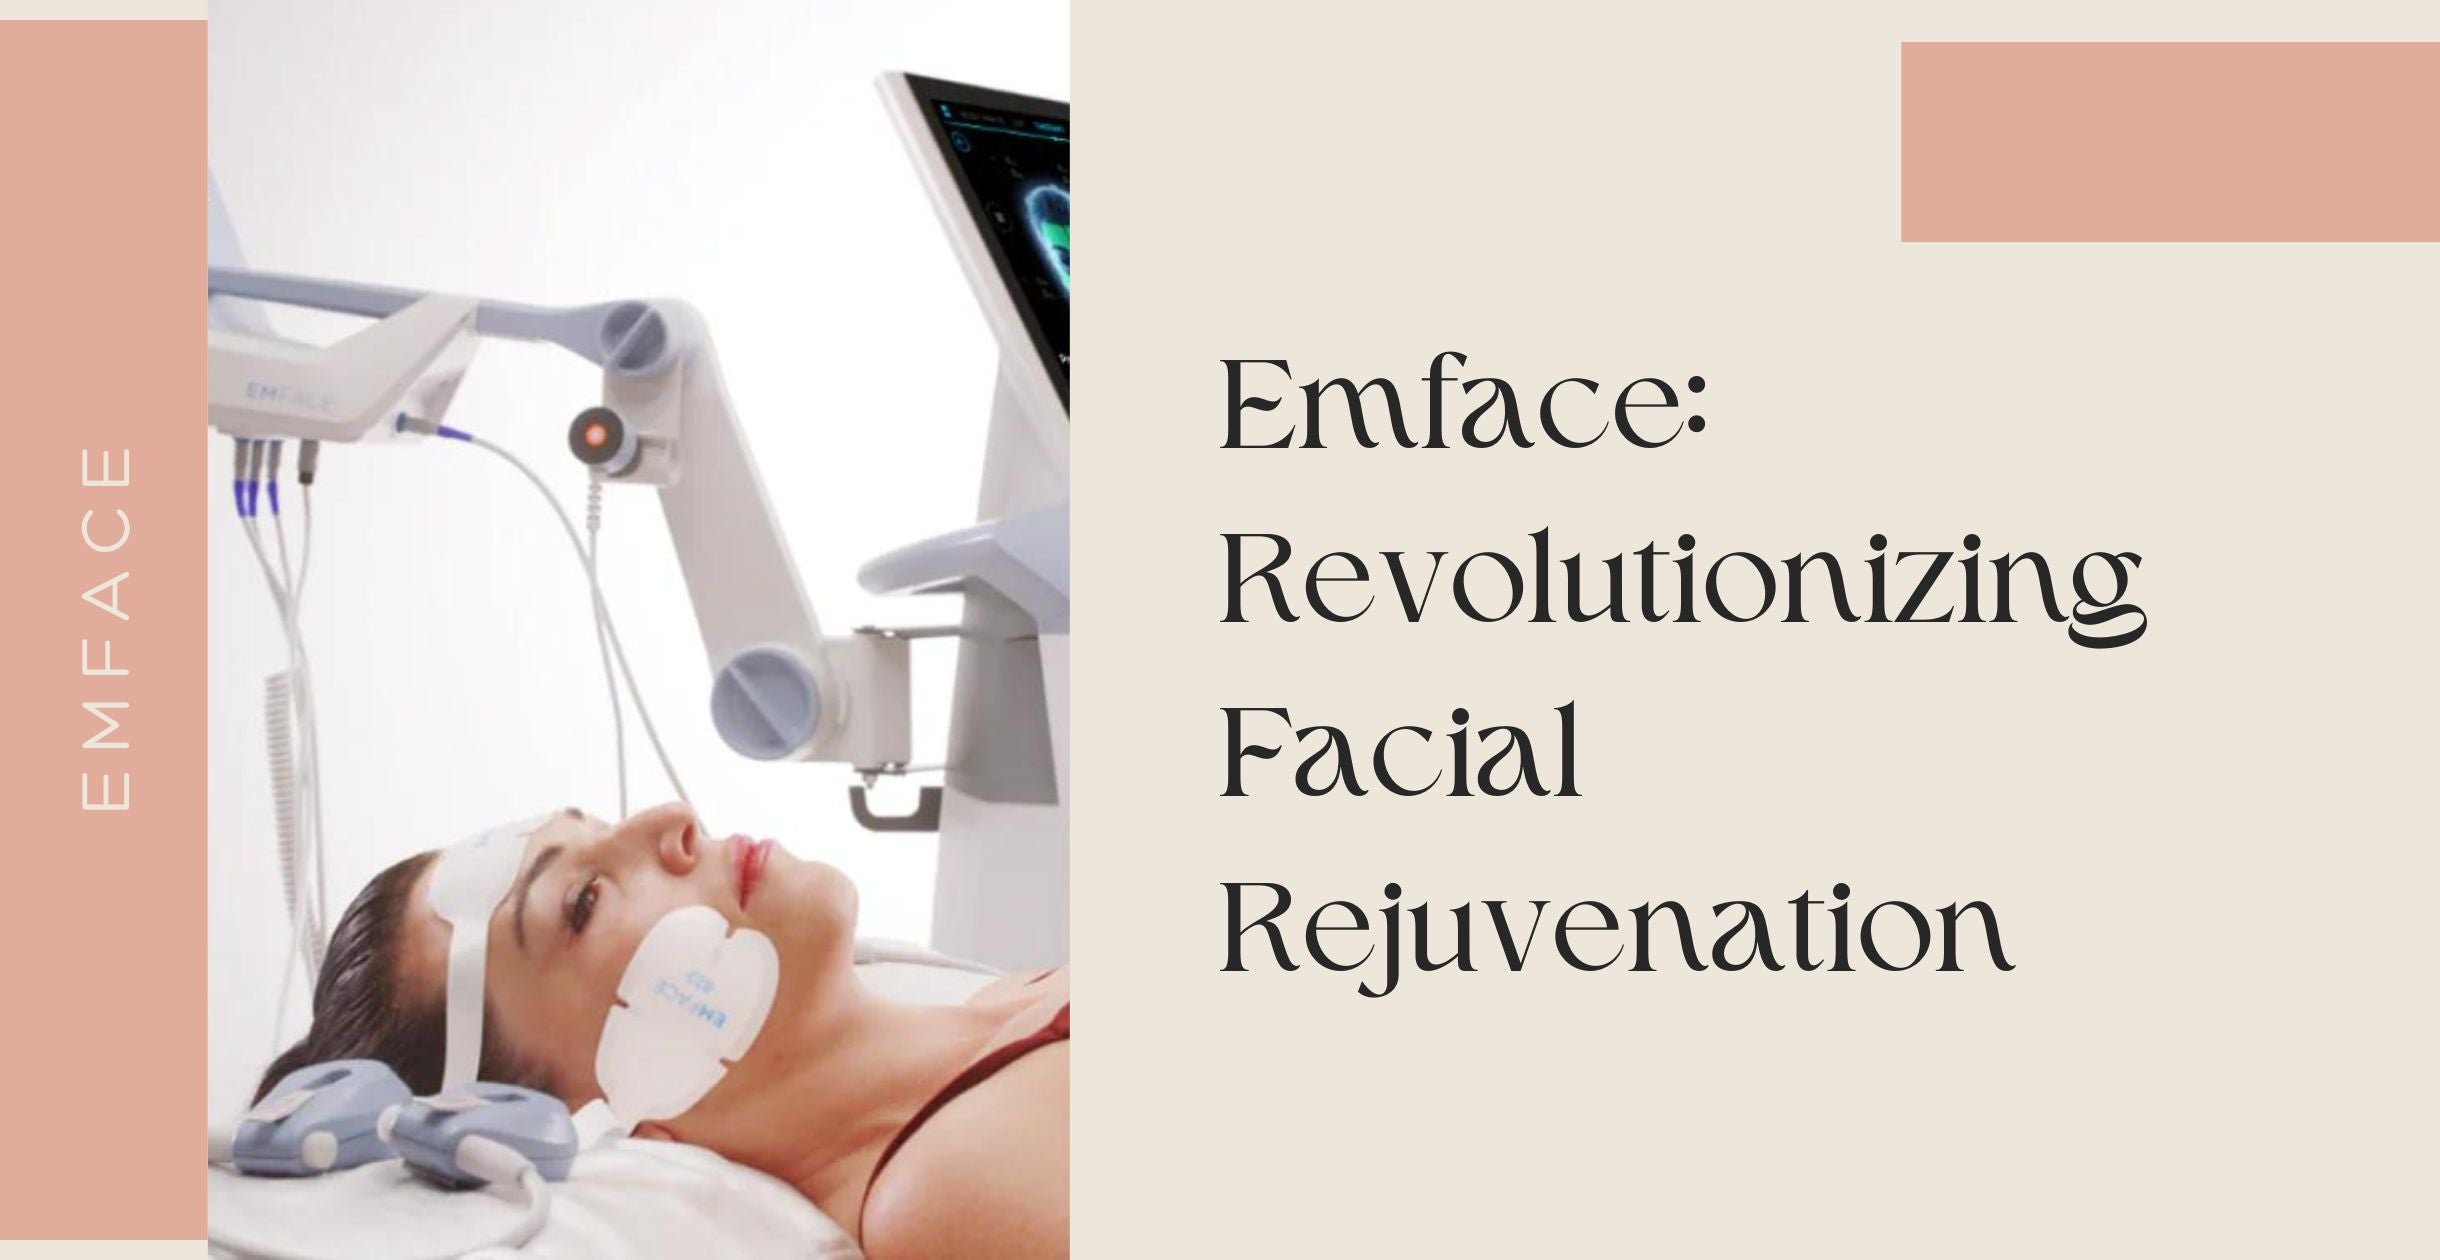 Emface: Revolutionizing Facial Rejuvenation